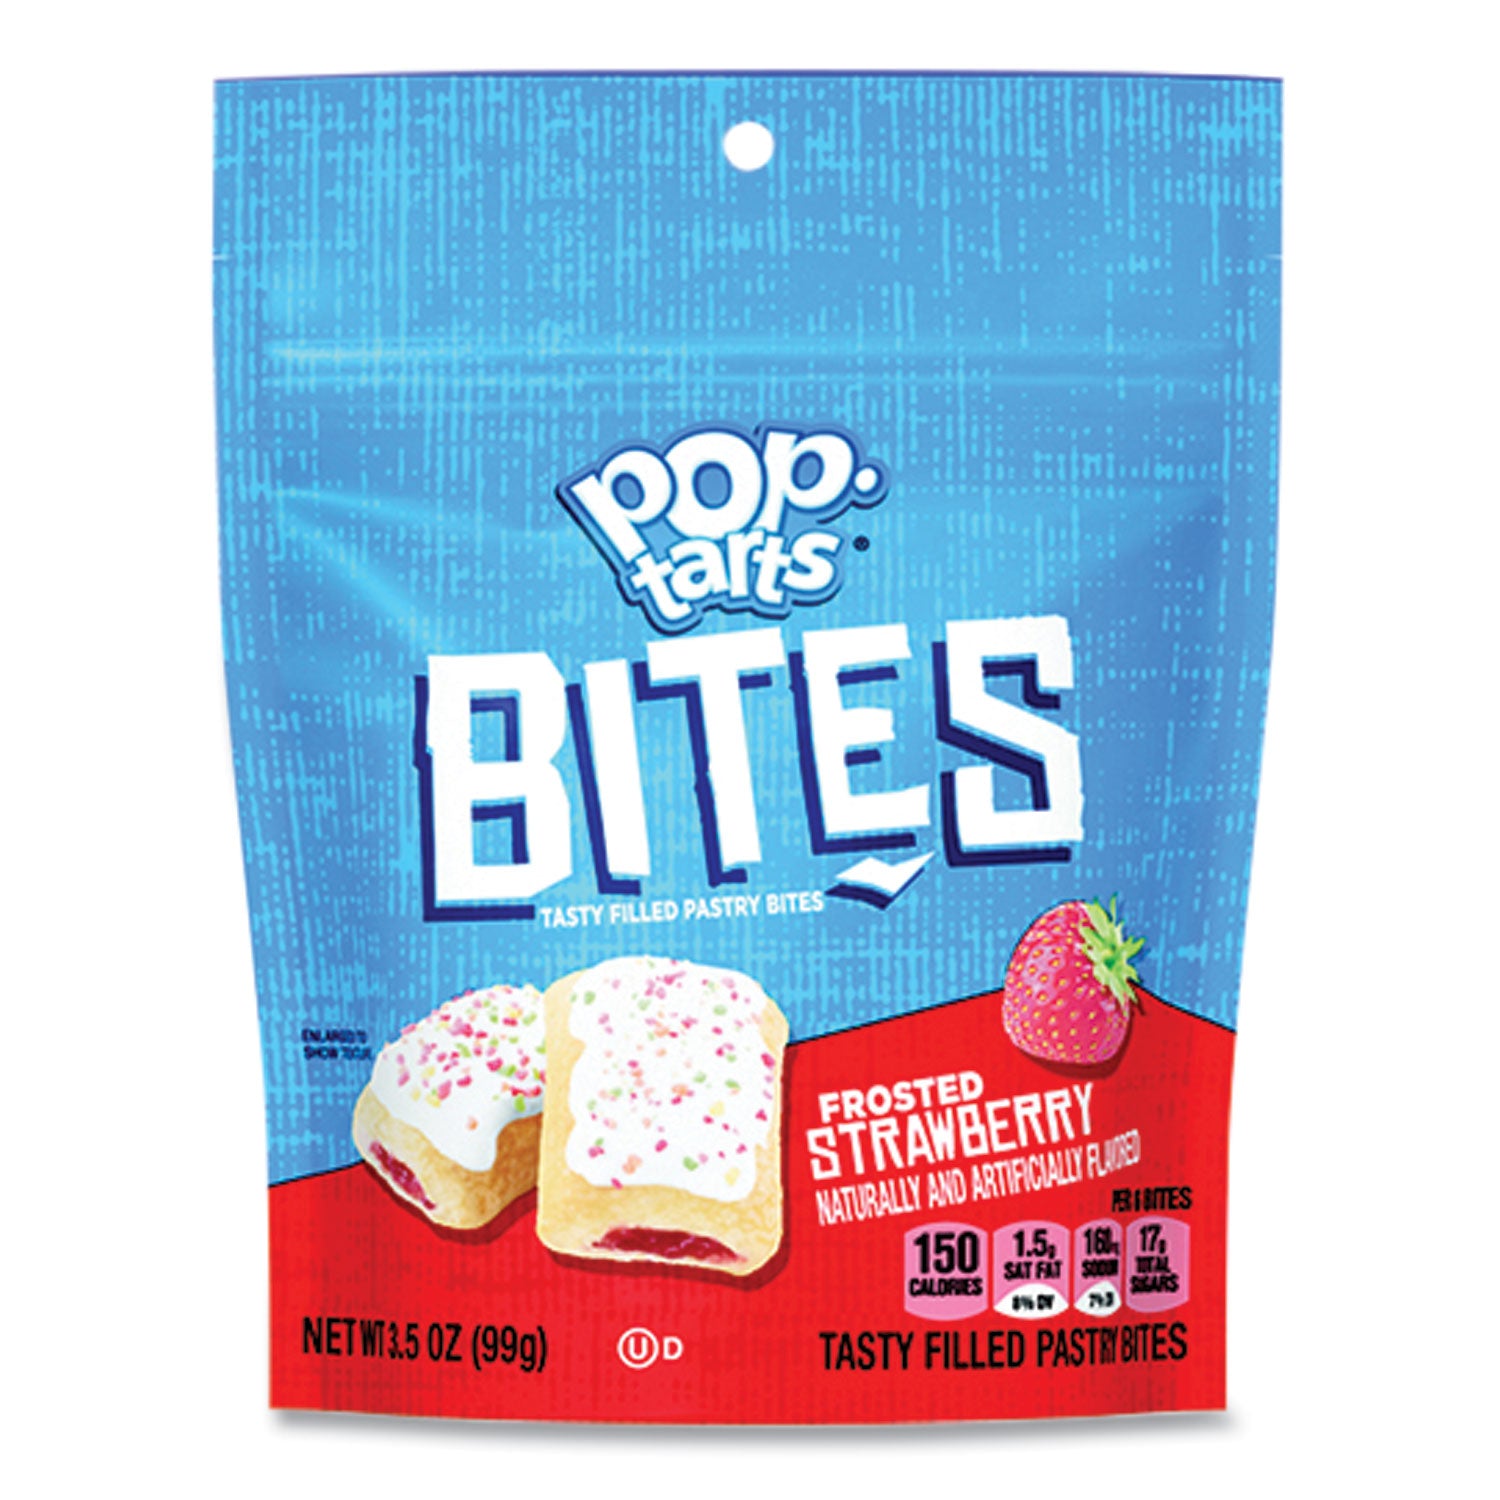 pop-tarts-bites-frosted-strawberry-35-oz-bag-6-carton_keb25069 - 1